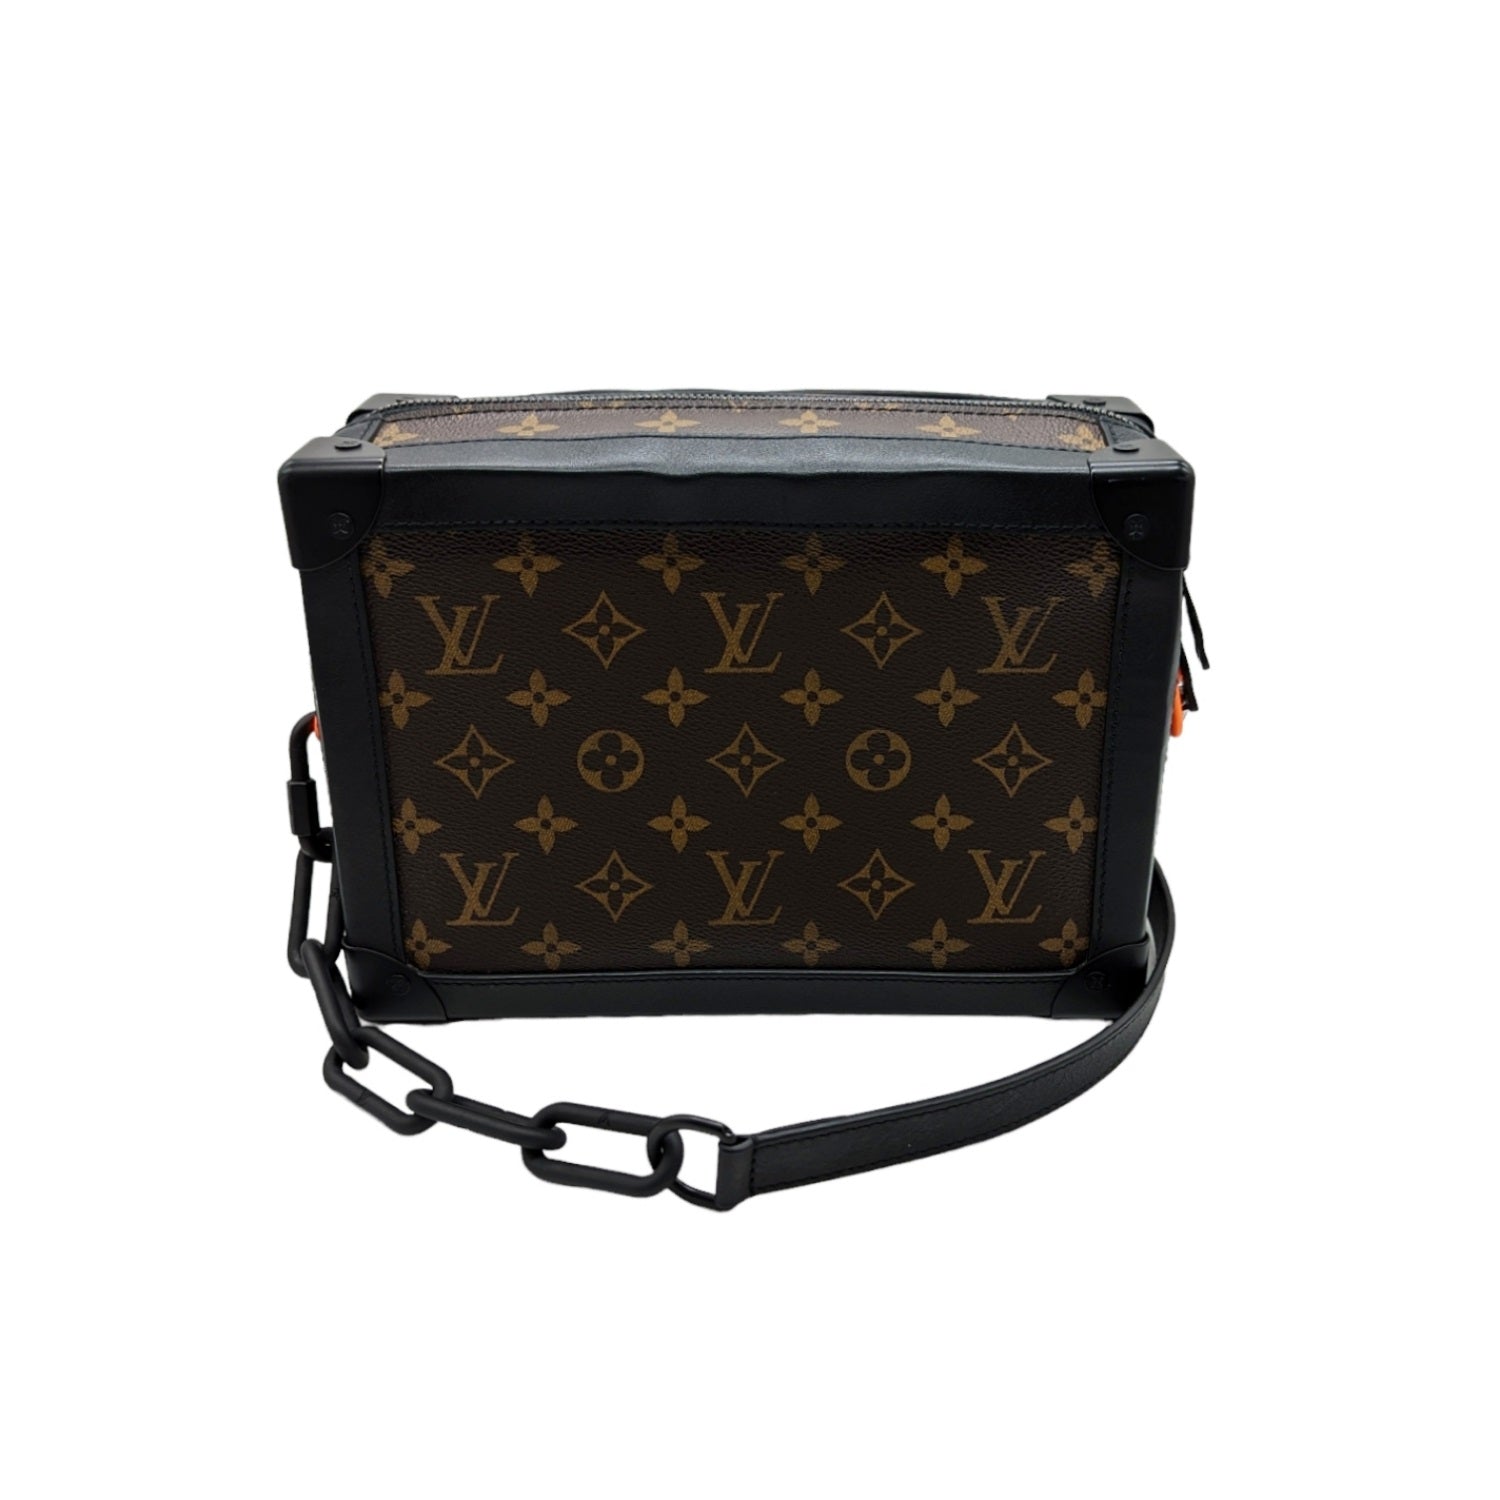 Louis Vuitton Damier Ebene Griet Shoulder Bag Sell Your Handbag